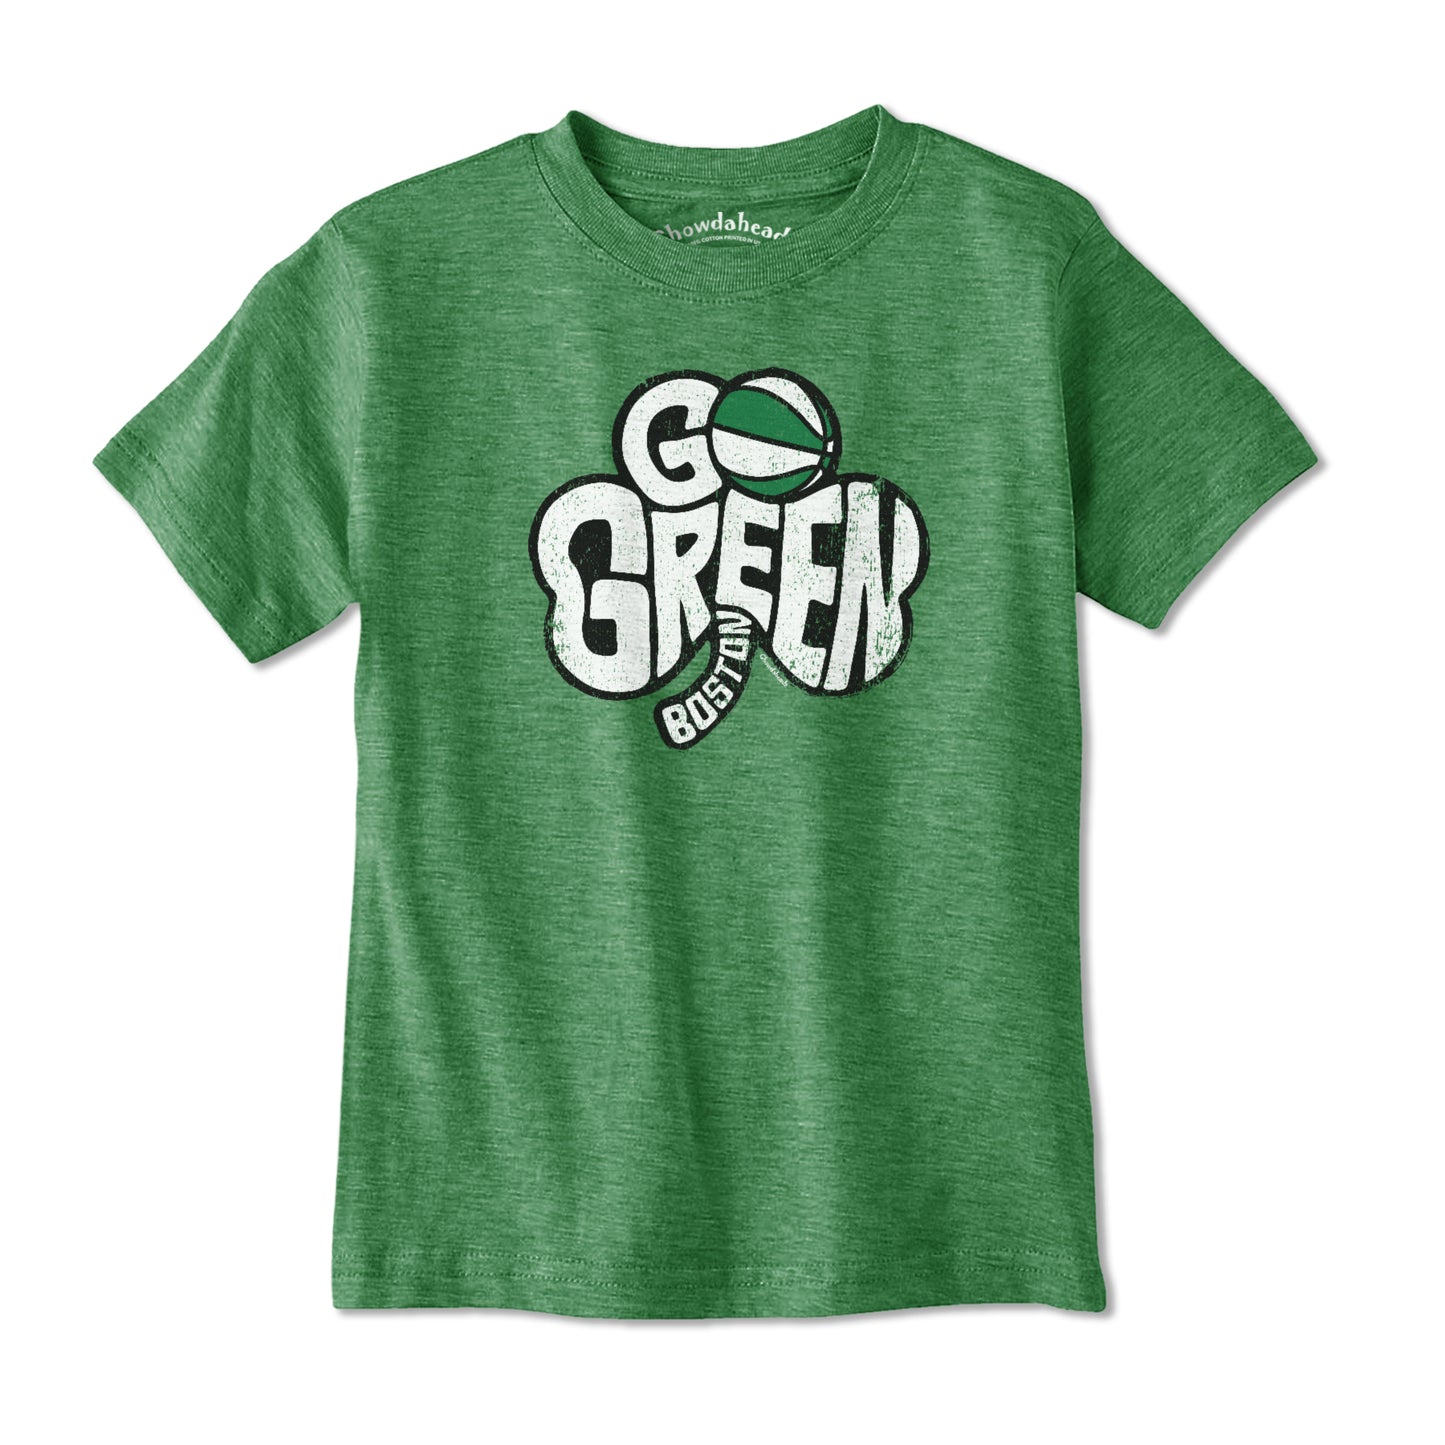 Go Green Boston Shamrock Youth T-shirt - Chowdaheadz